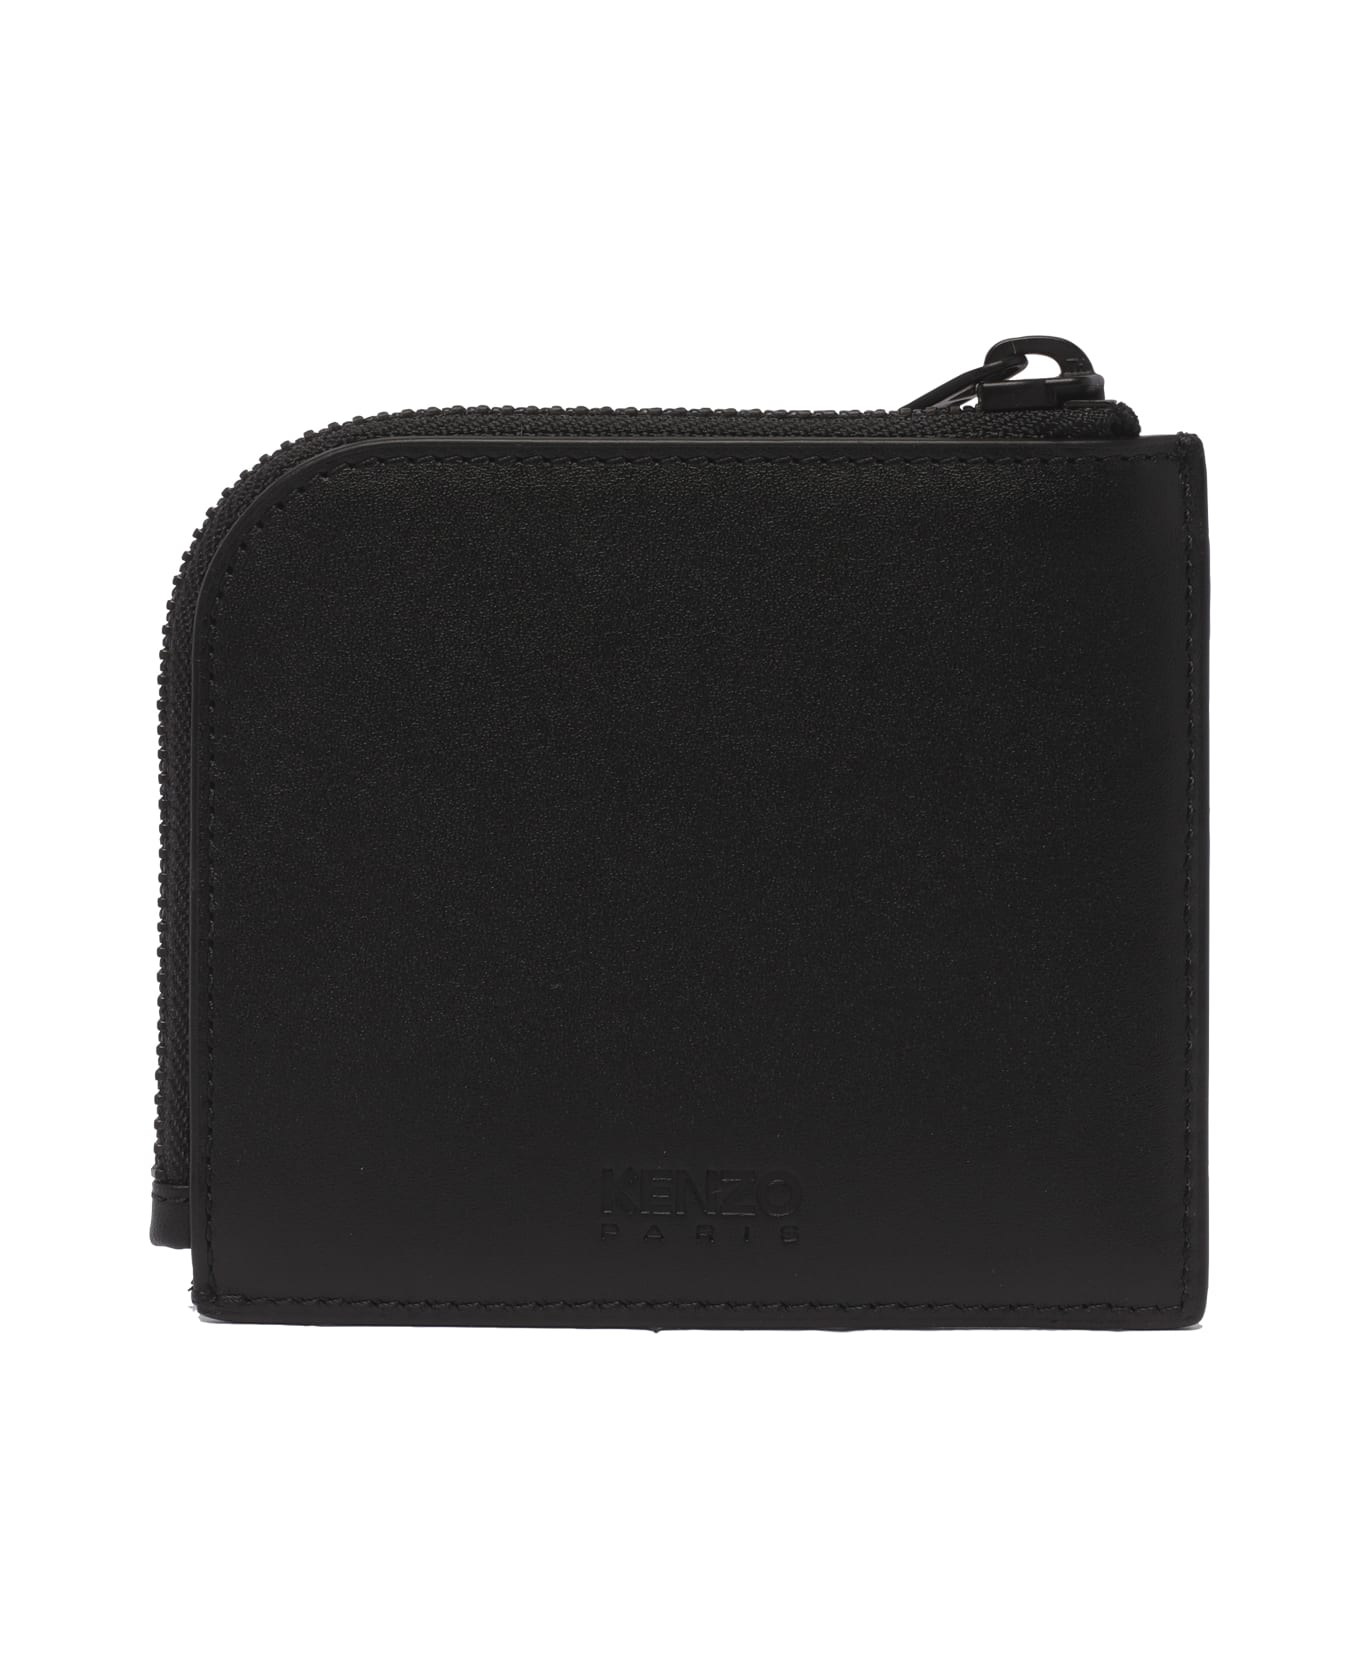 Kenzo Logo-printed Zipped Wallet - Black